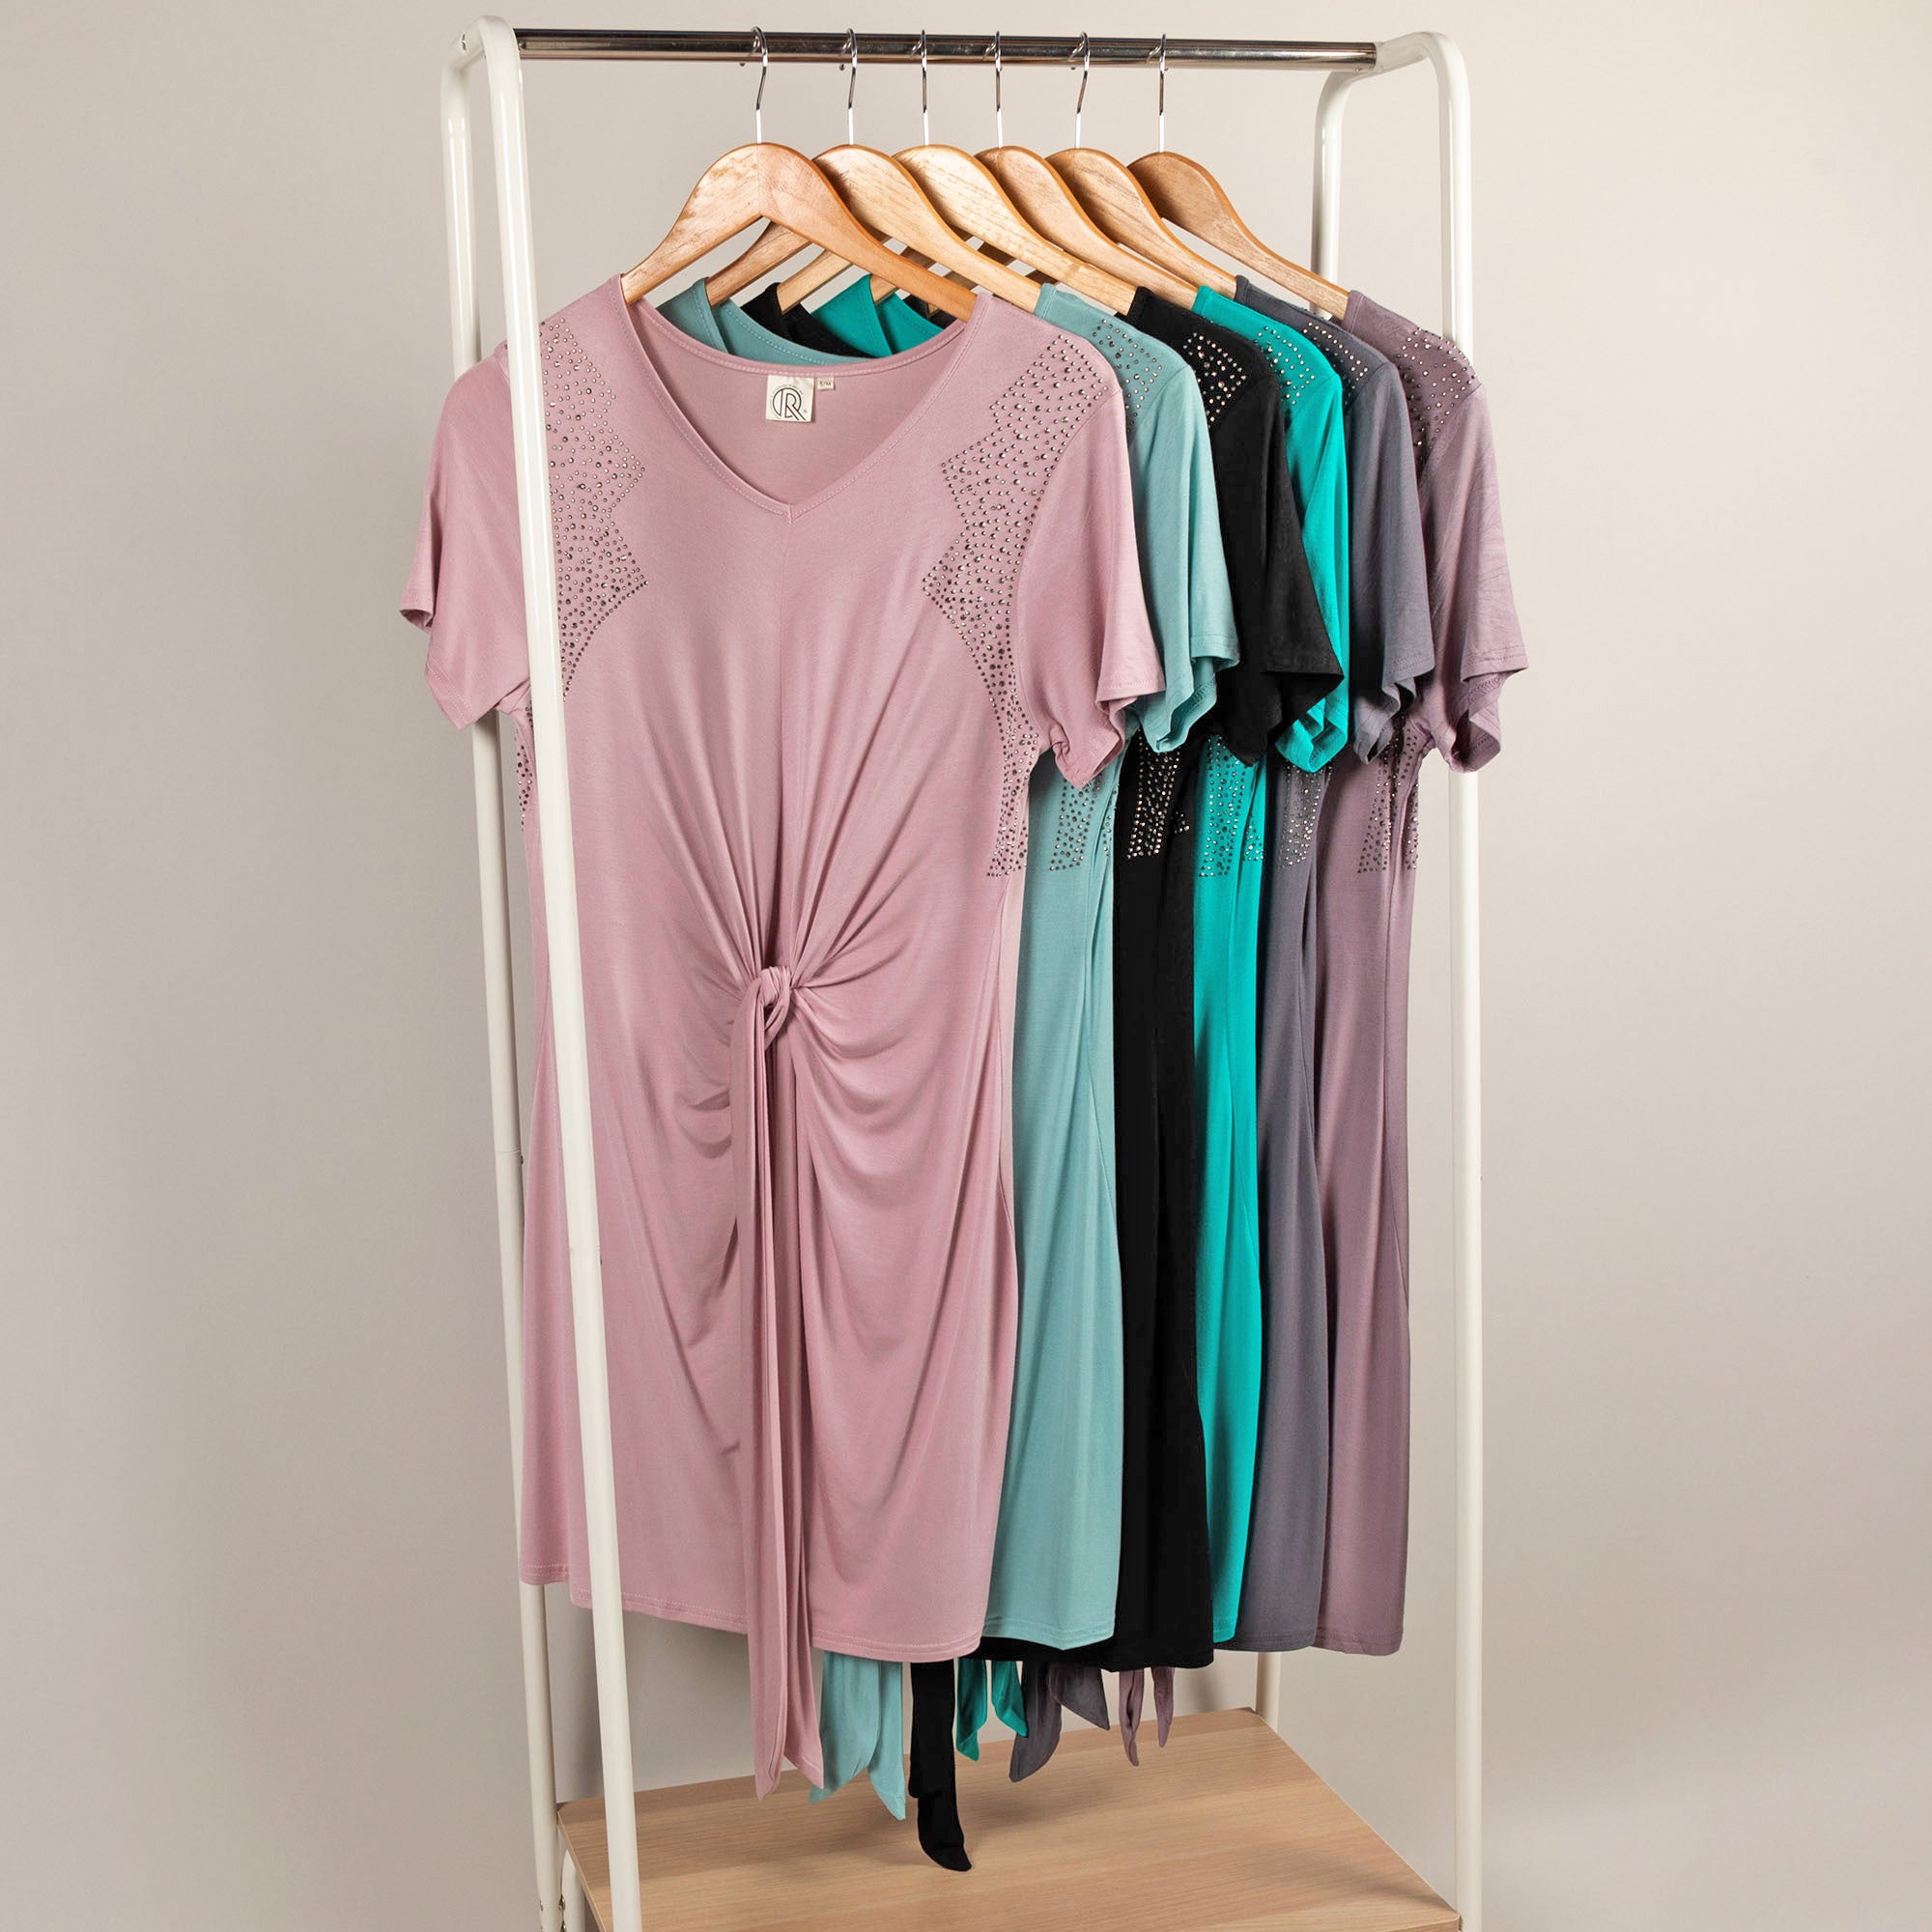 Twist Tie-Front Short Sleeve Dress With Rhinestones - Mint - S/M